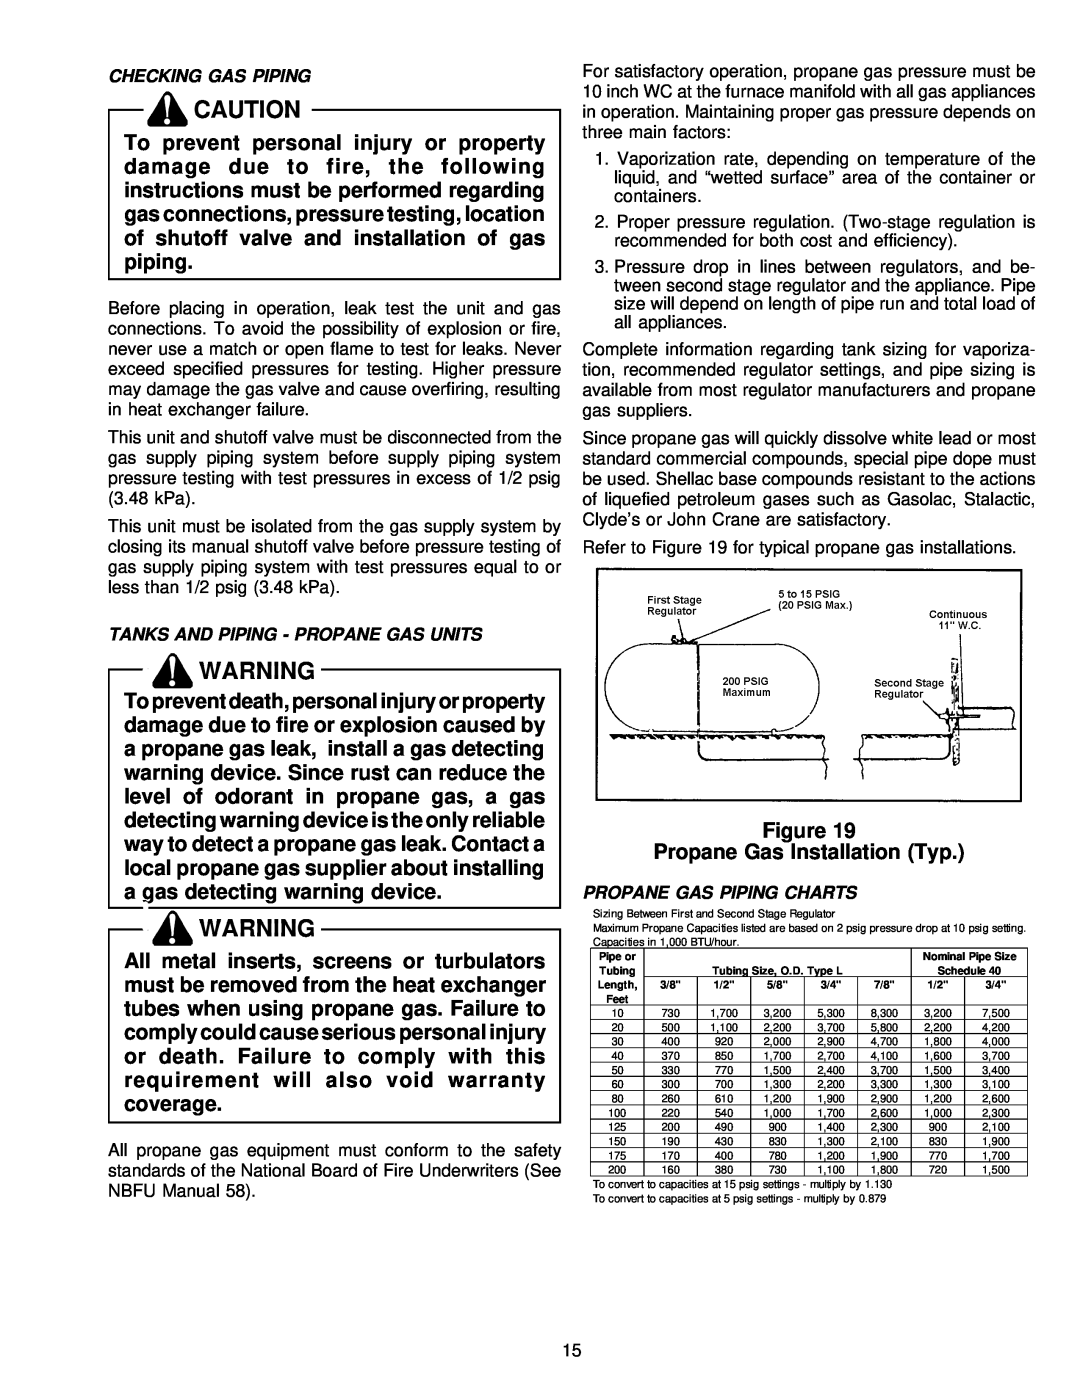 Amana VR8205 installation instructions Figure Propane Gas Installation Typ 